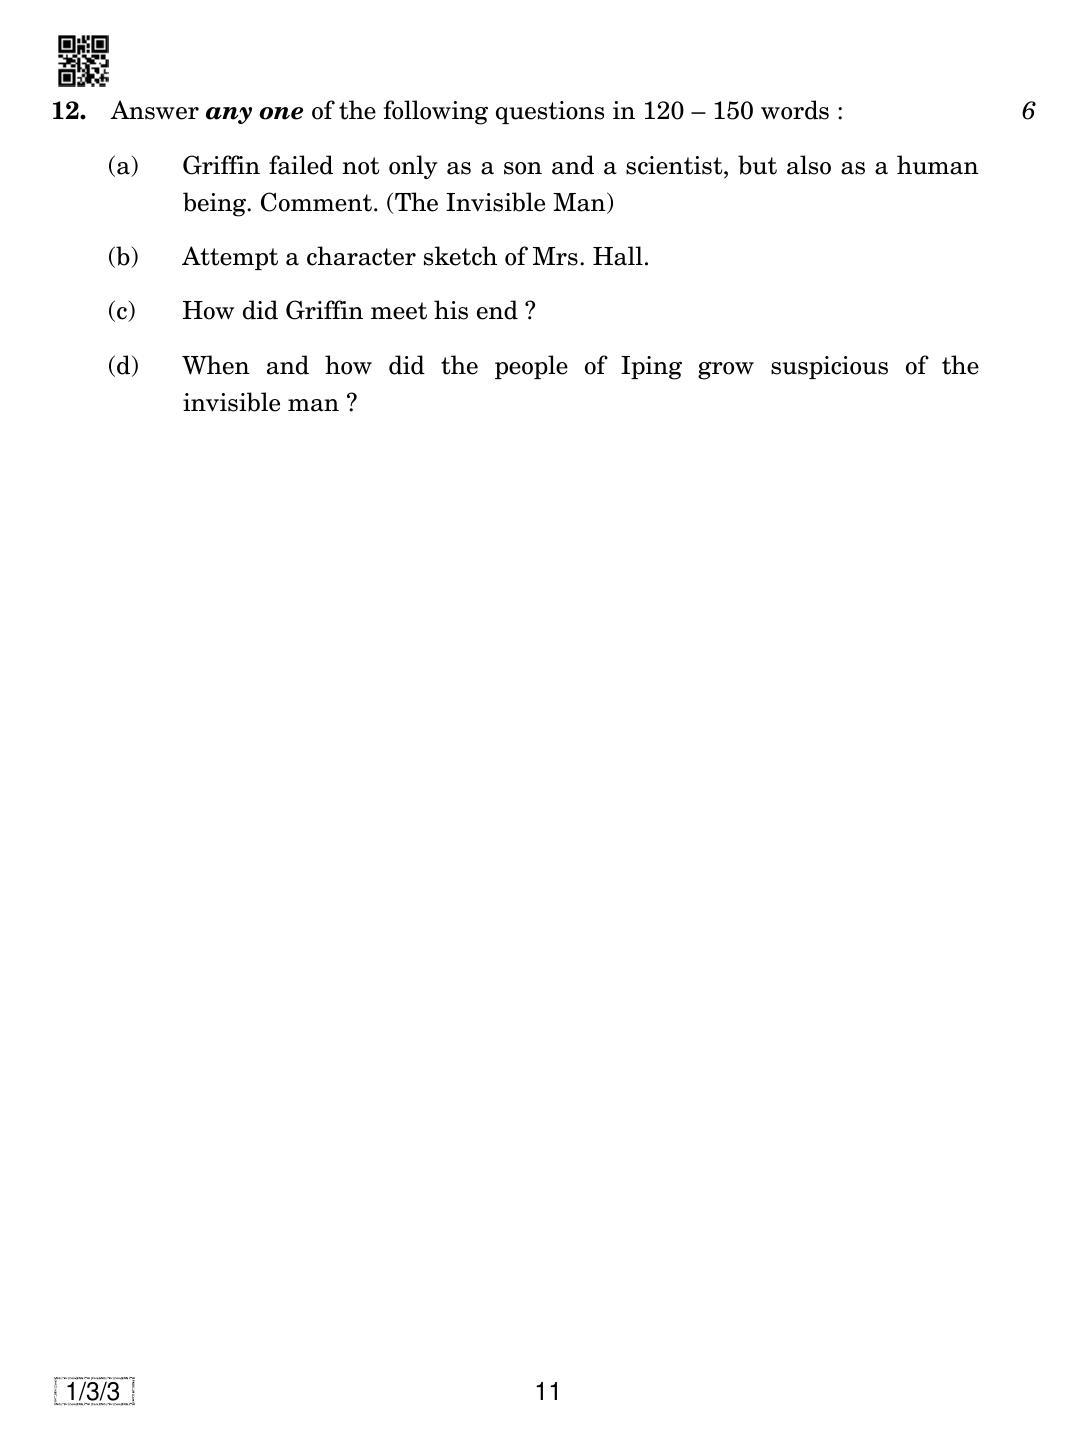 CBSE Class 12 1-3-3 English Core 2019 Question Paper - Page 11